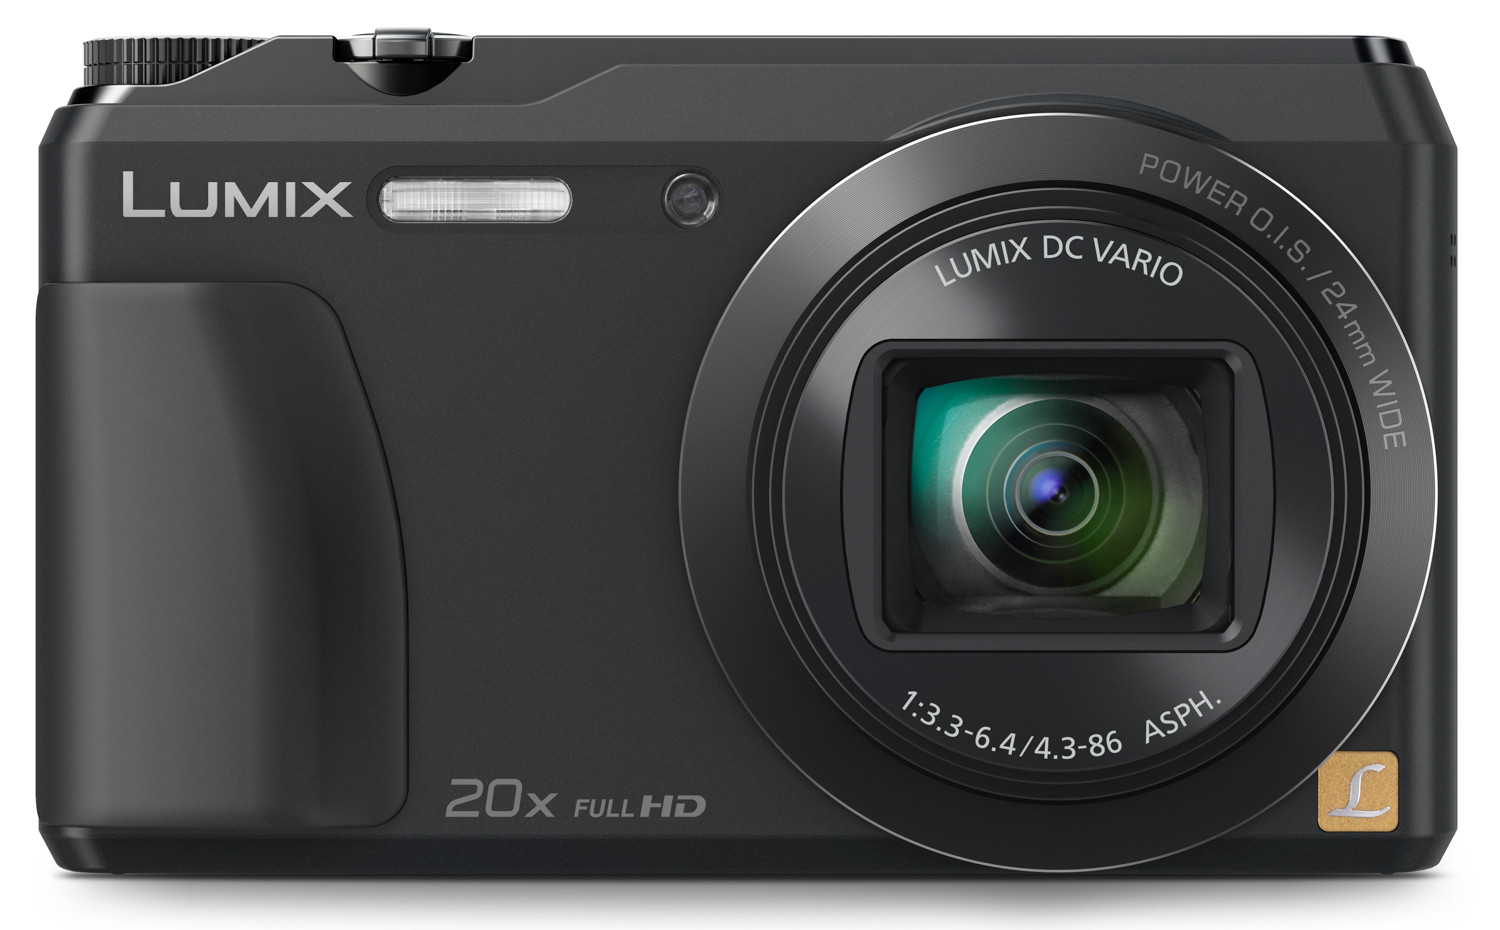 Фотоаппарат Panasonic Lumix DMC-TZ55 Black